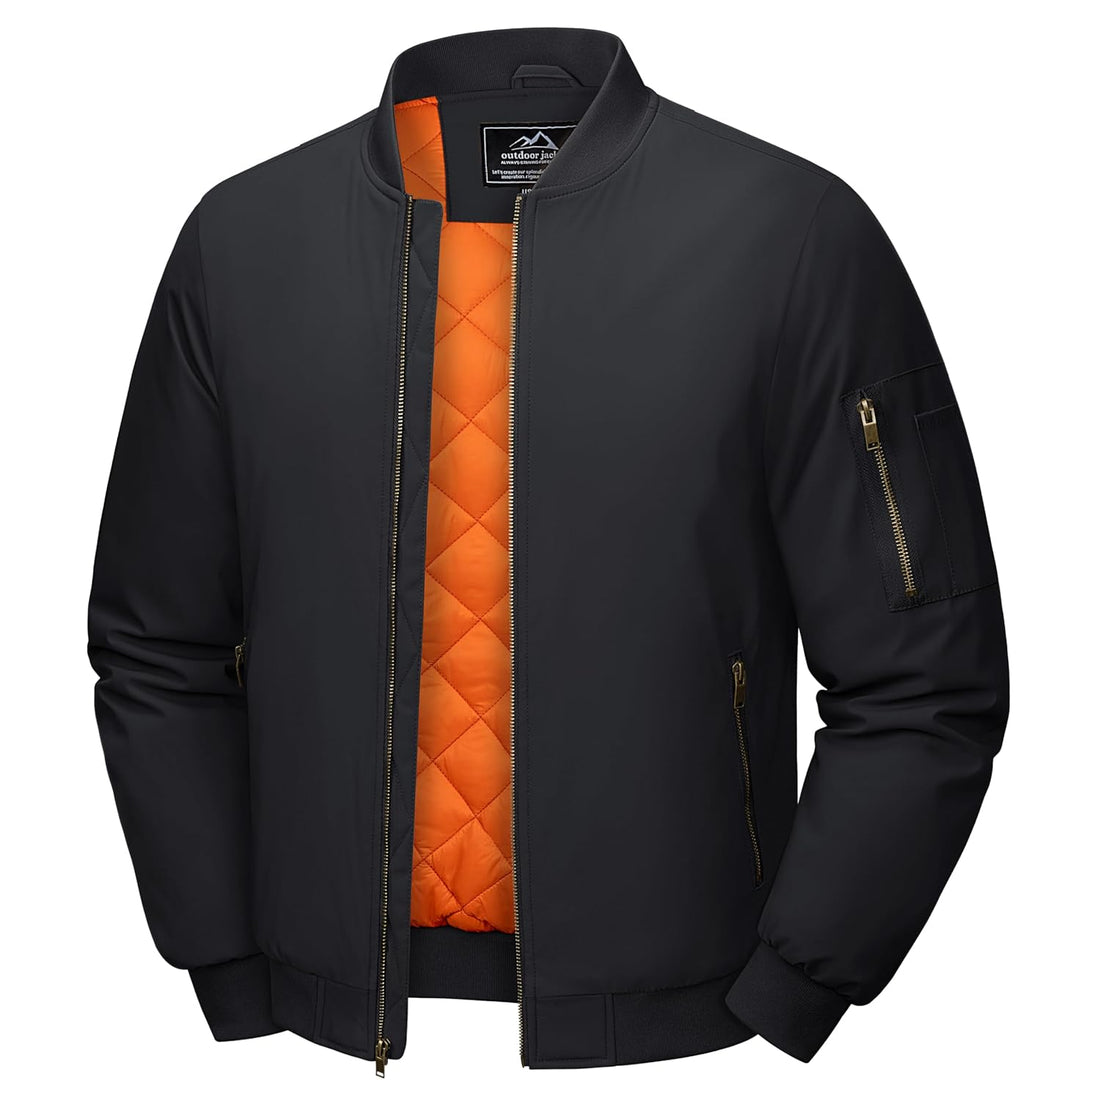 MAGCOMSEN Winter Coats for Men Bomber Jacket Black Air Force Pilot Jacket Winter Jackets for Men Varsity Jacket Flight Jacket Warm Jacket